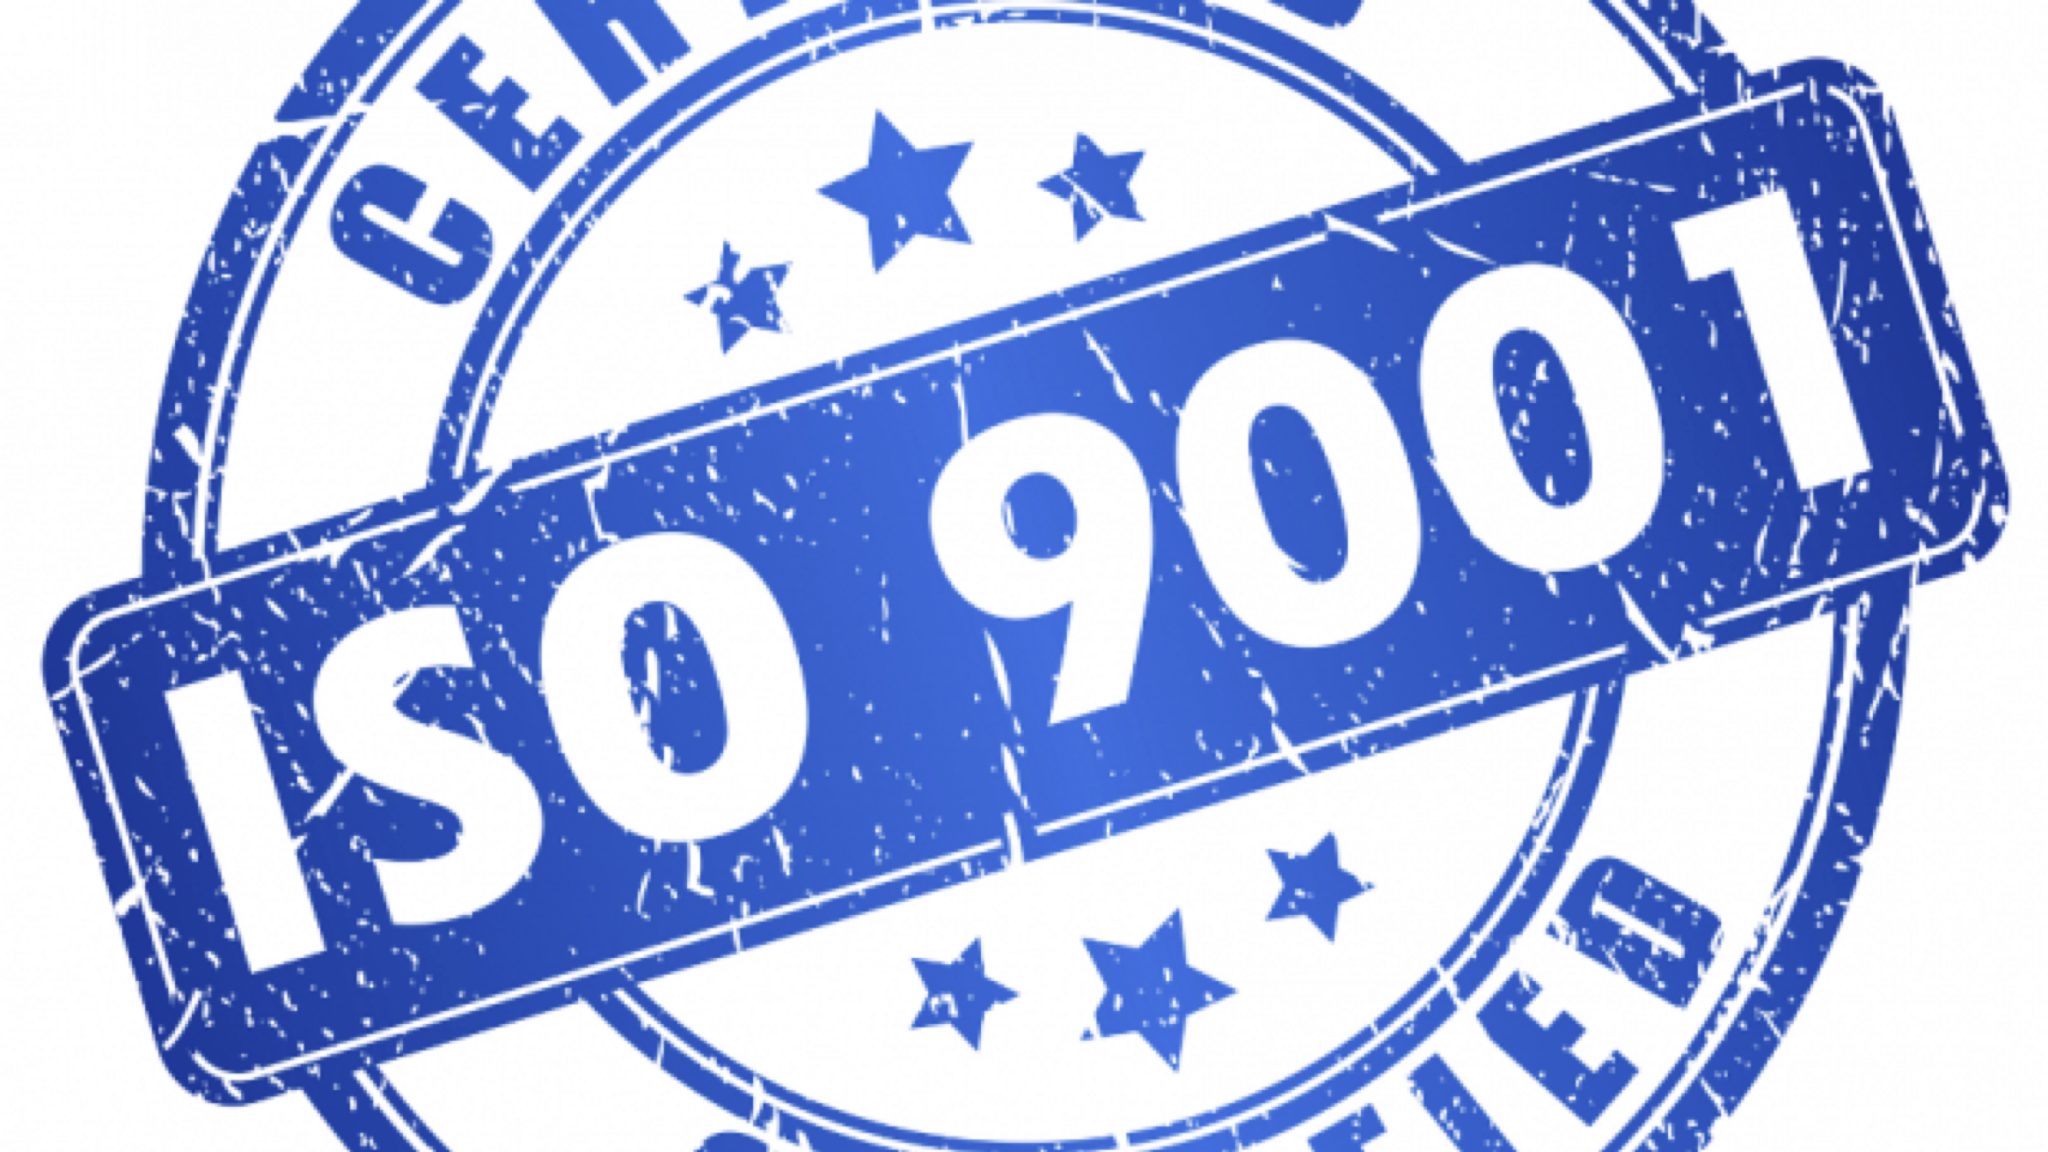 ISO 9001: Petrico reacccredited